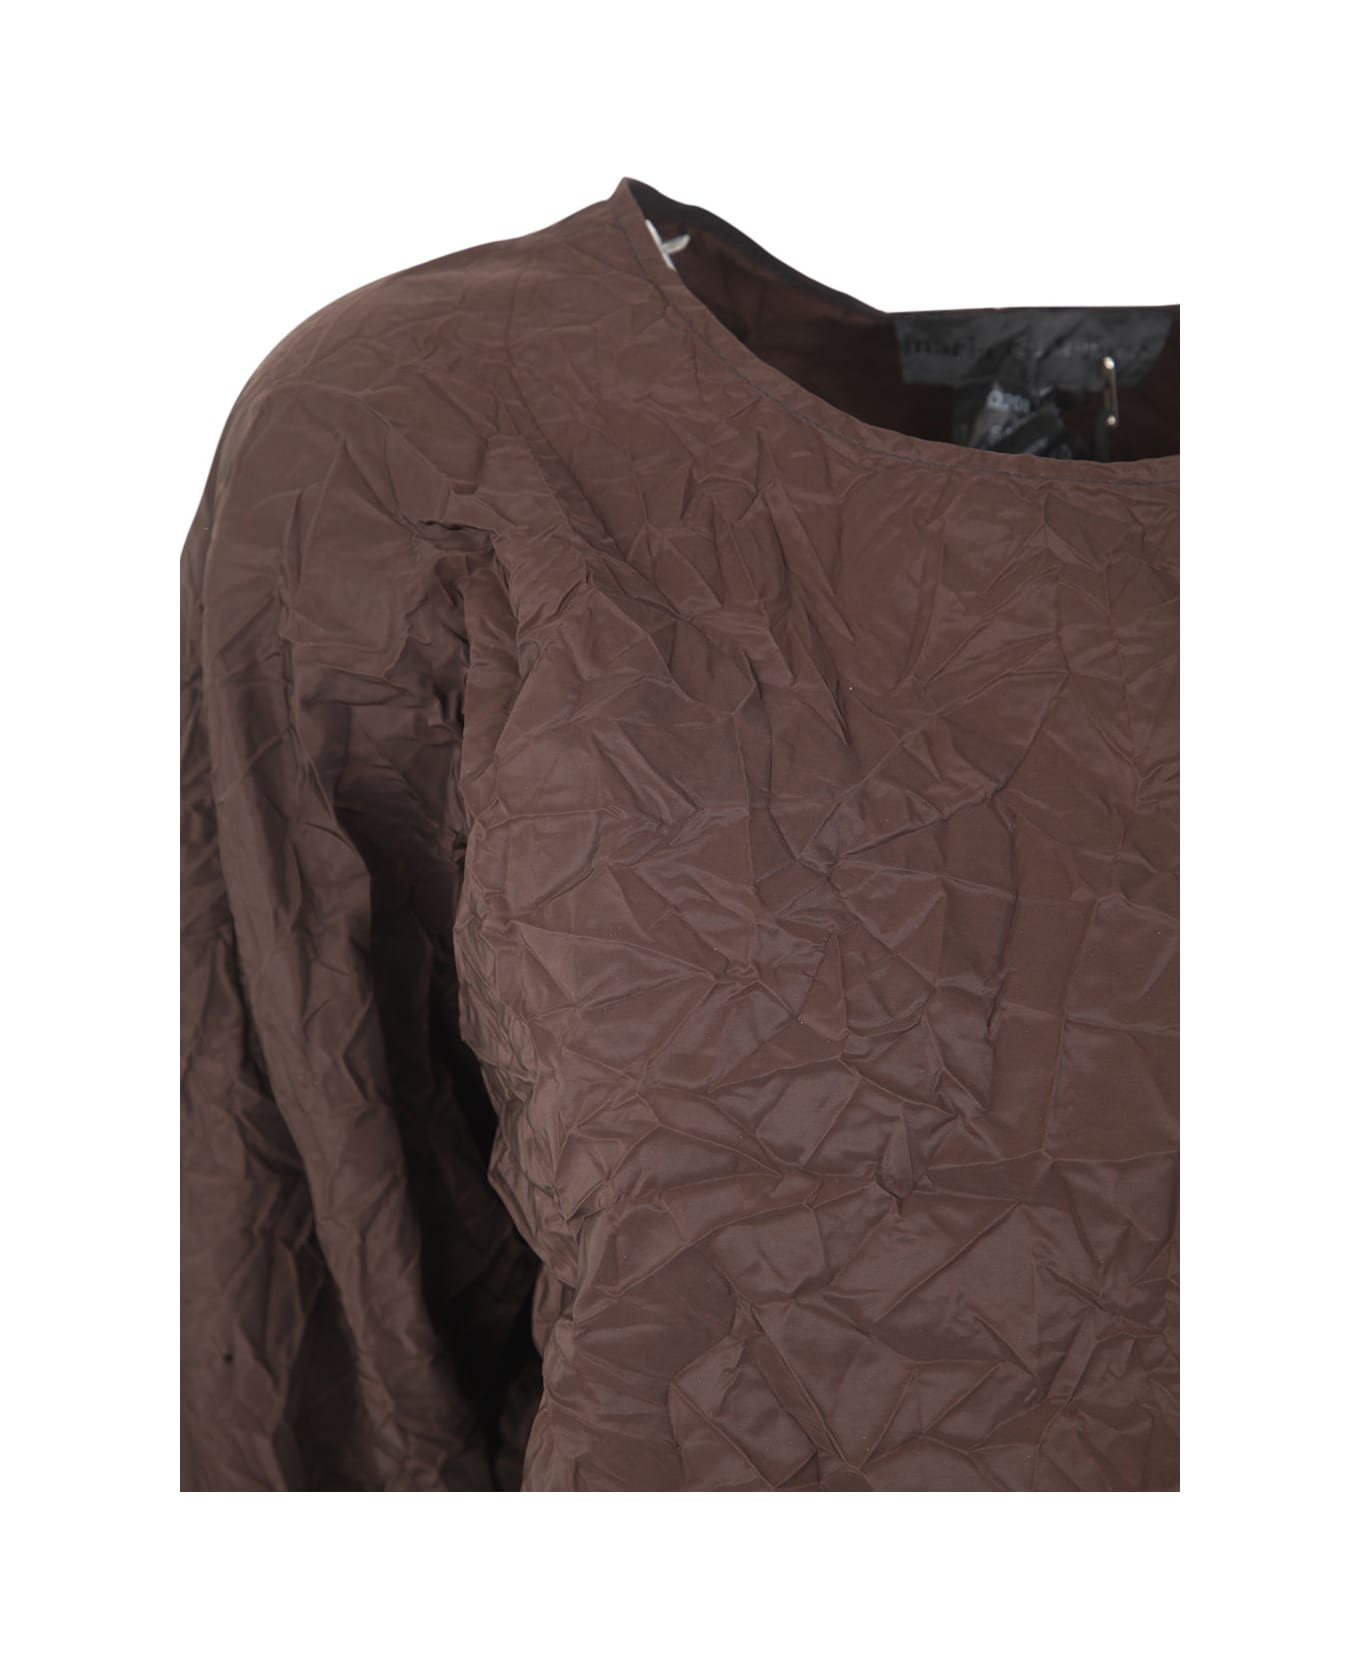 Maria Calderara Crinkled Opaque Taffeta Sweater - Dark Chocolate